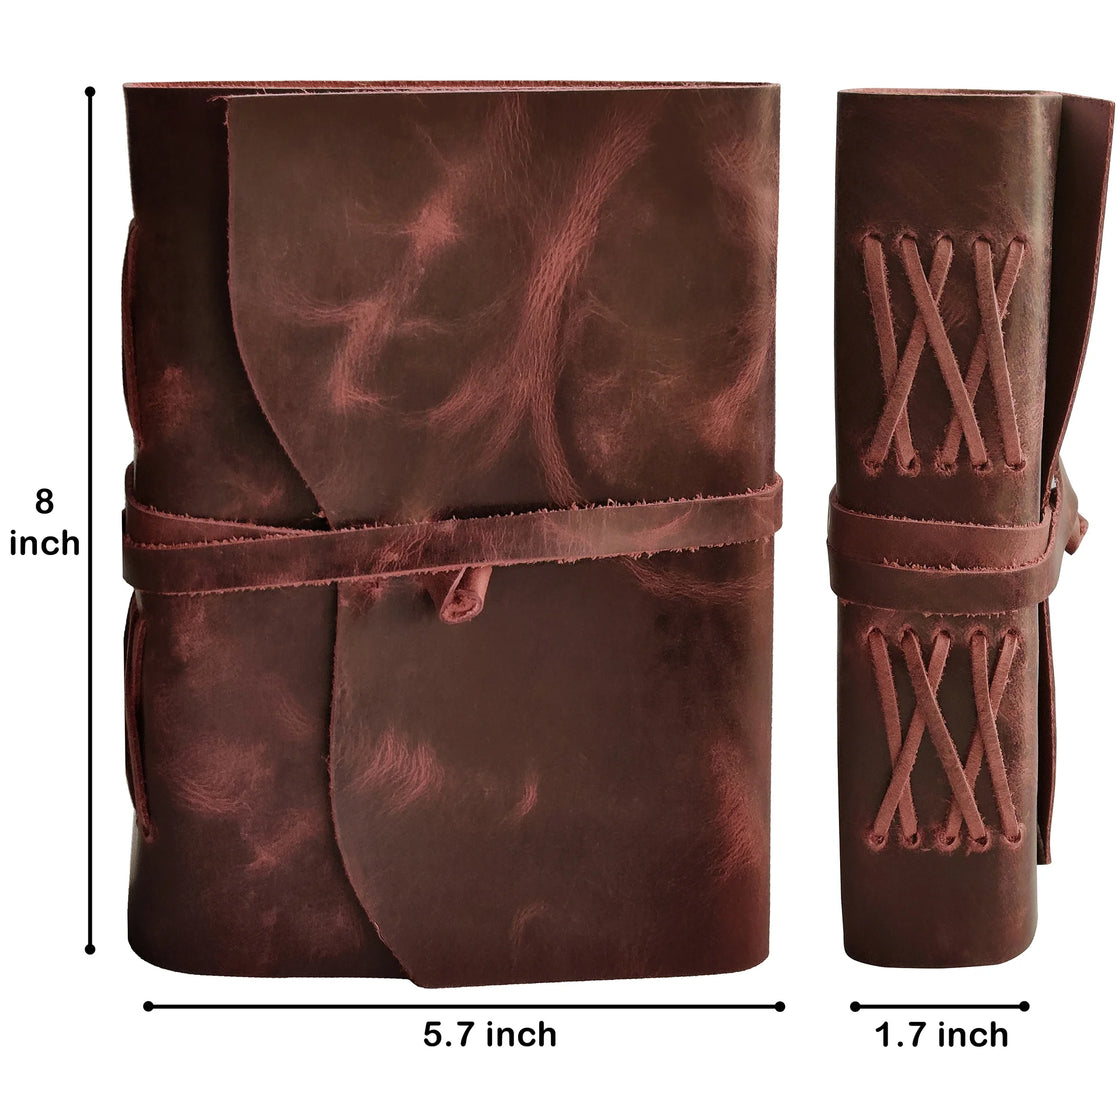 Leather Bound Journal - A5 Handmade Antique Deckle Edge Paper, Mauve